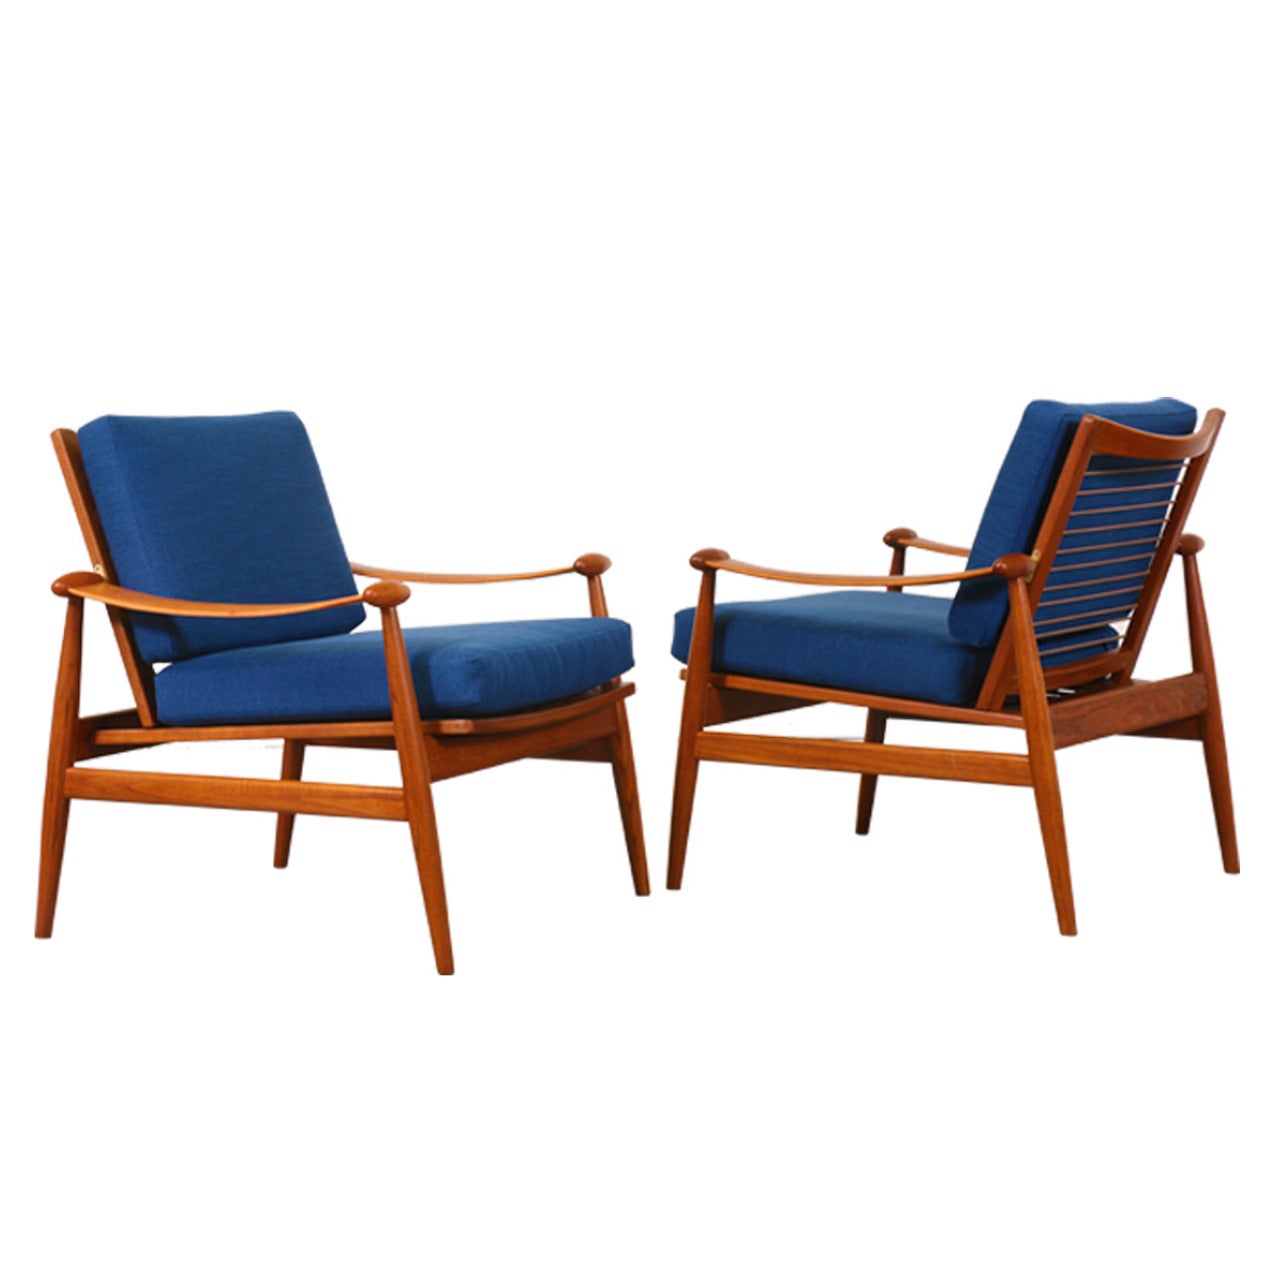 Finn Juhl Model #133 “Spade” Teak Lounge Chairs for France & Son